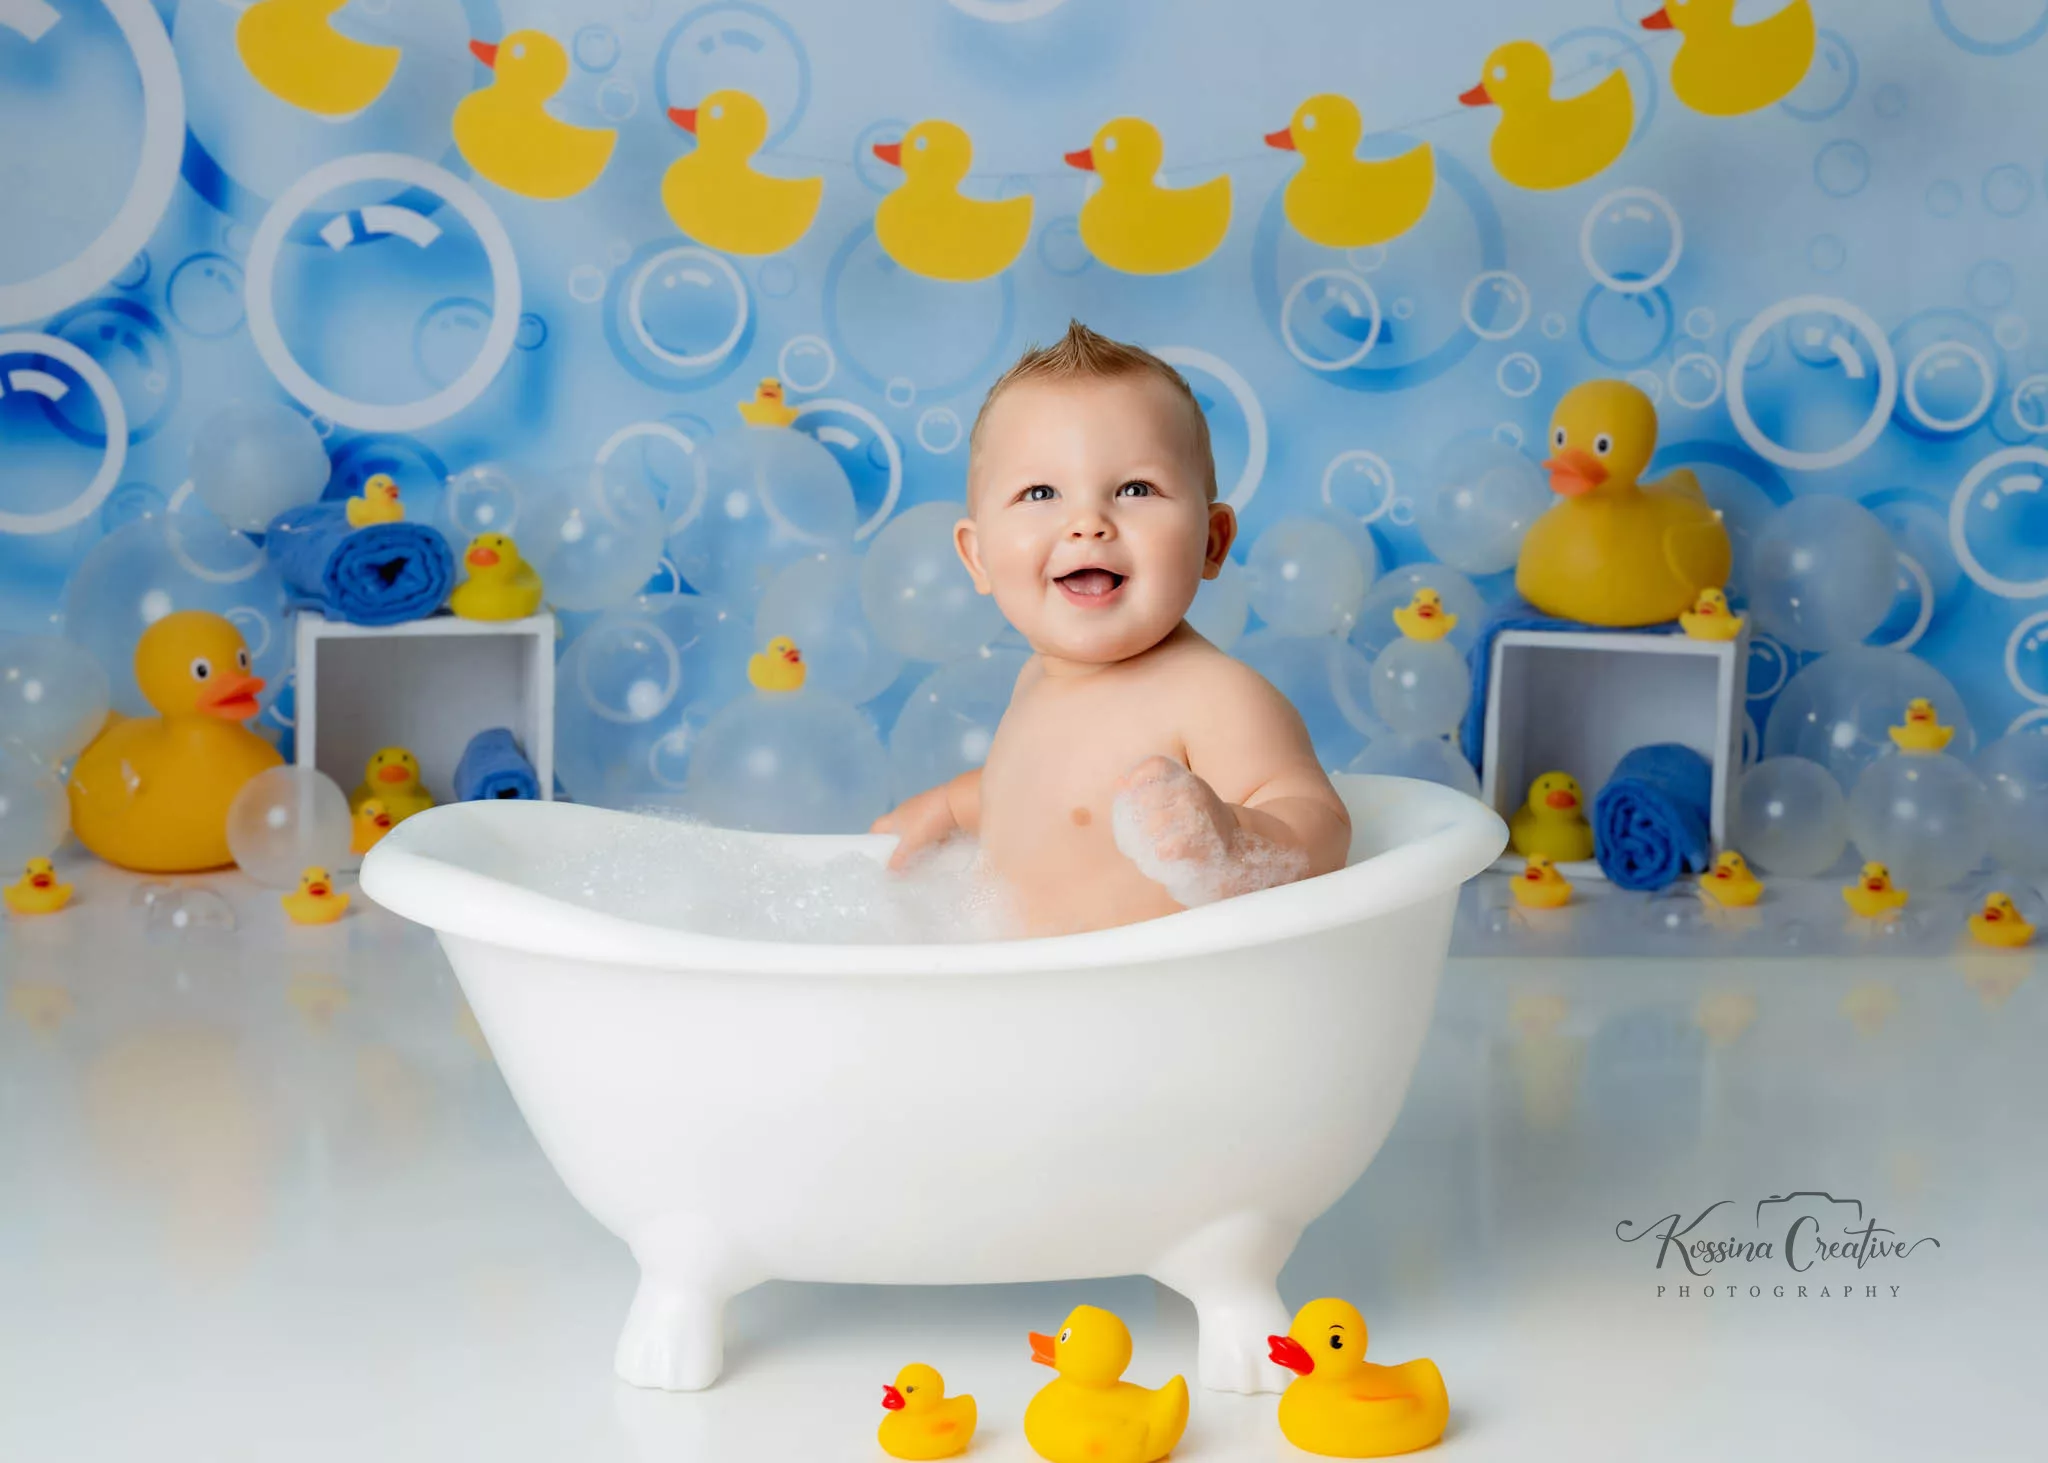 Orlando Boy Cake Smash 1st Birthday Photographer Photo Studio rubber ducky bubble bath splish splash